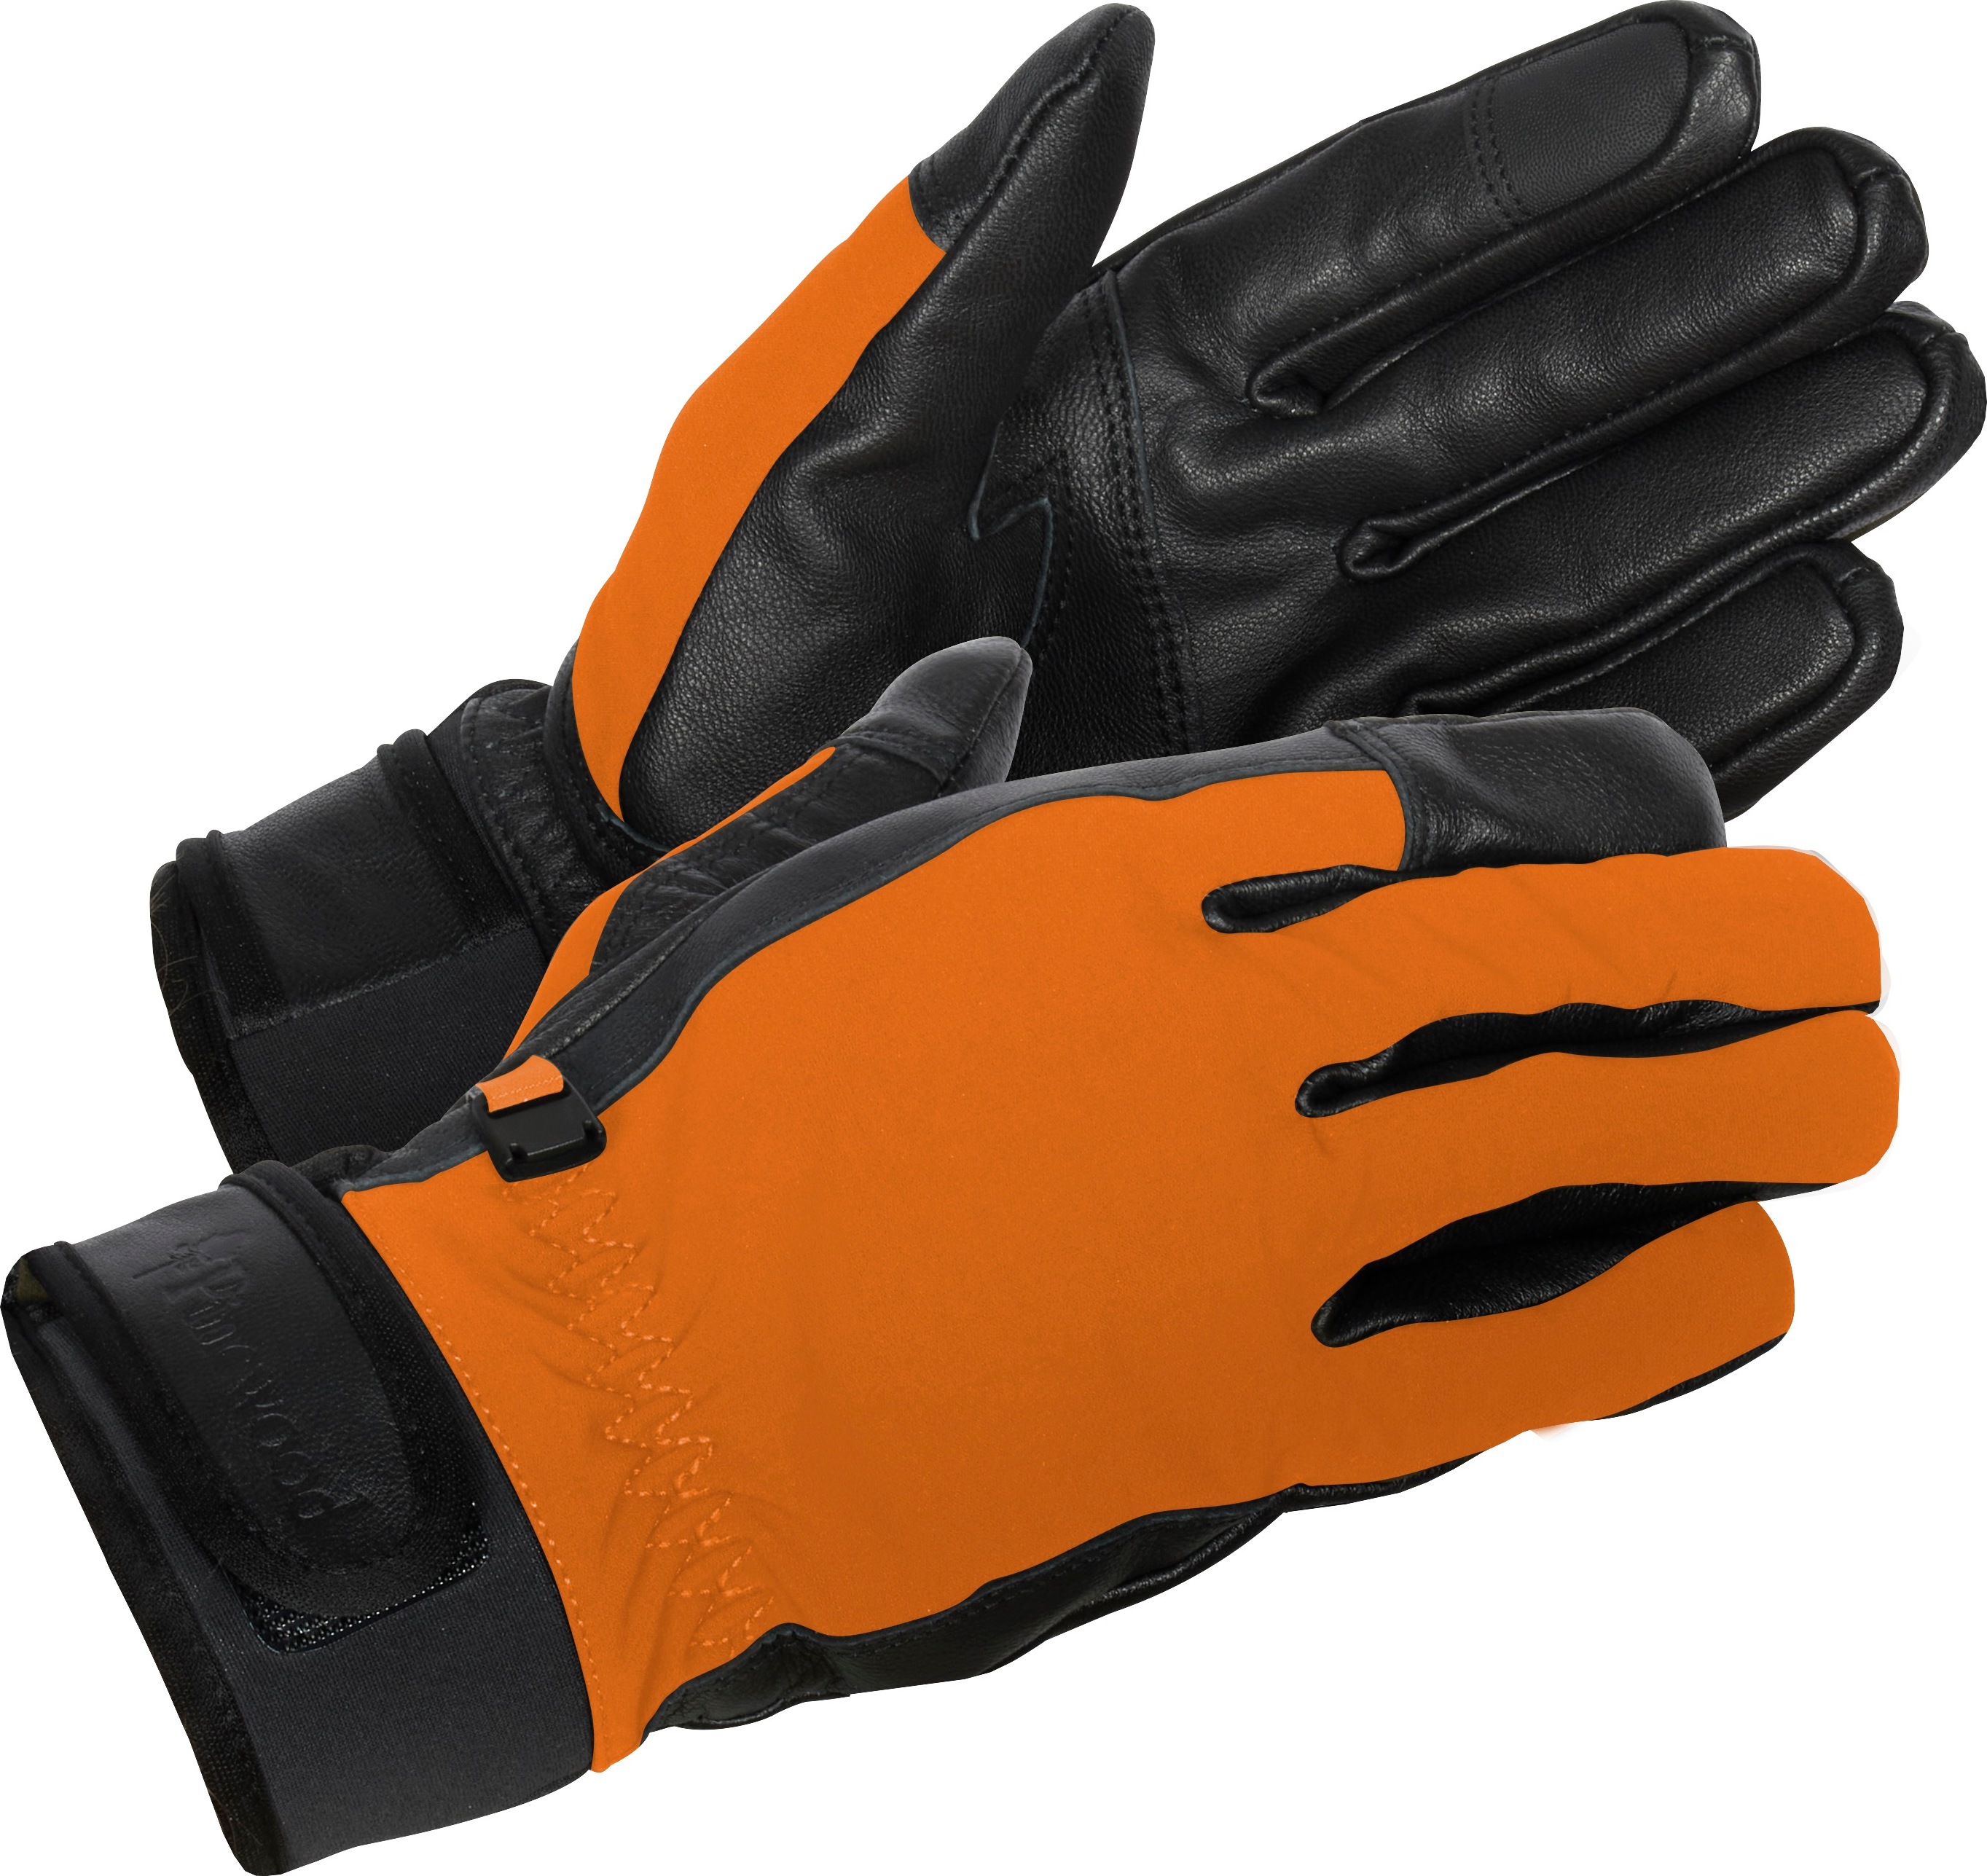 Pinewood Furudal Hunters Glove Orange/Black